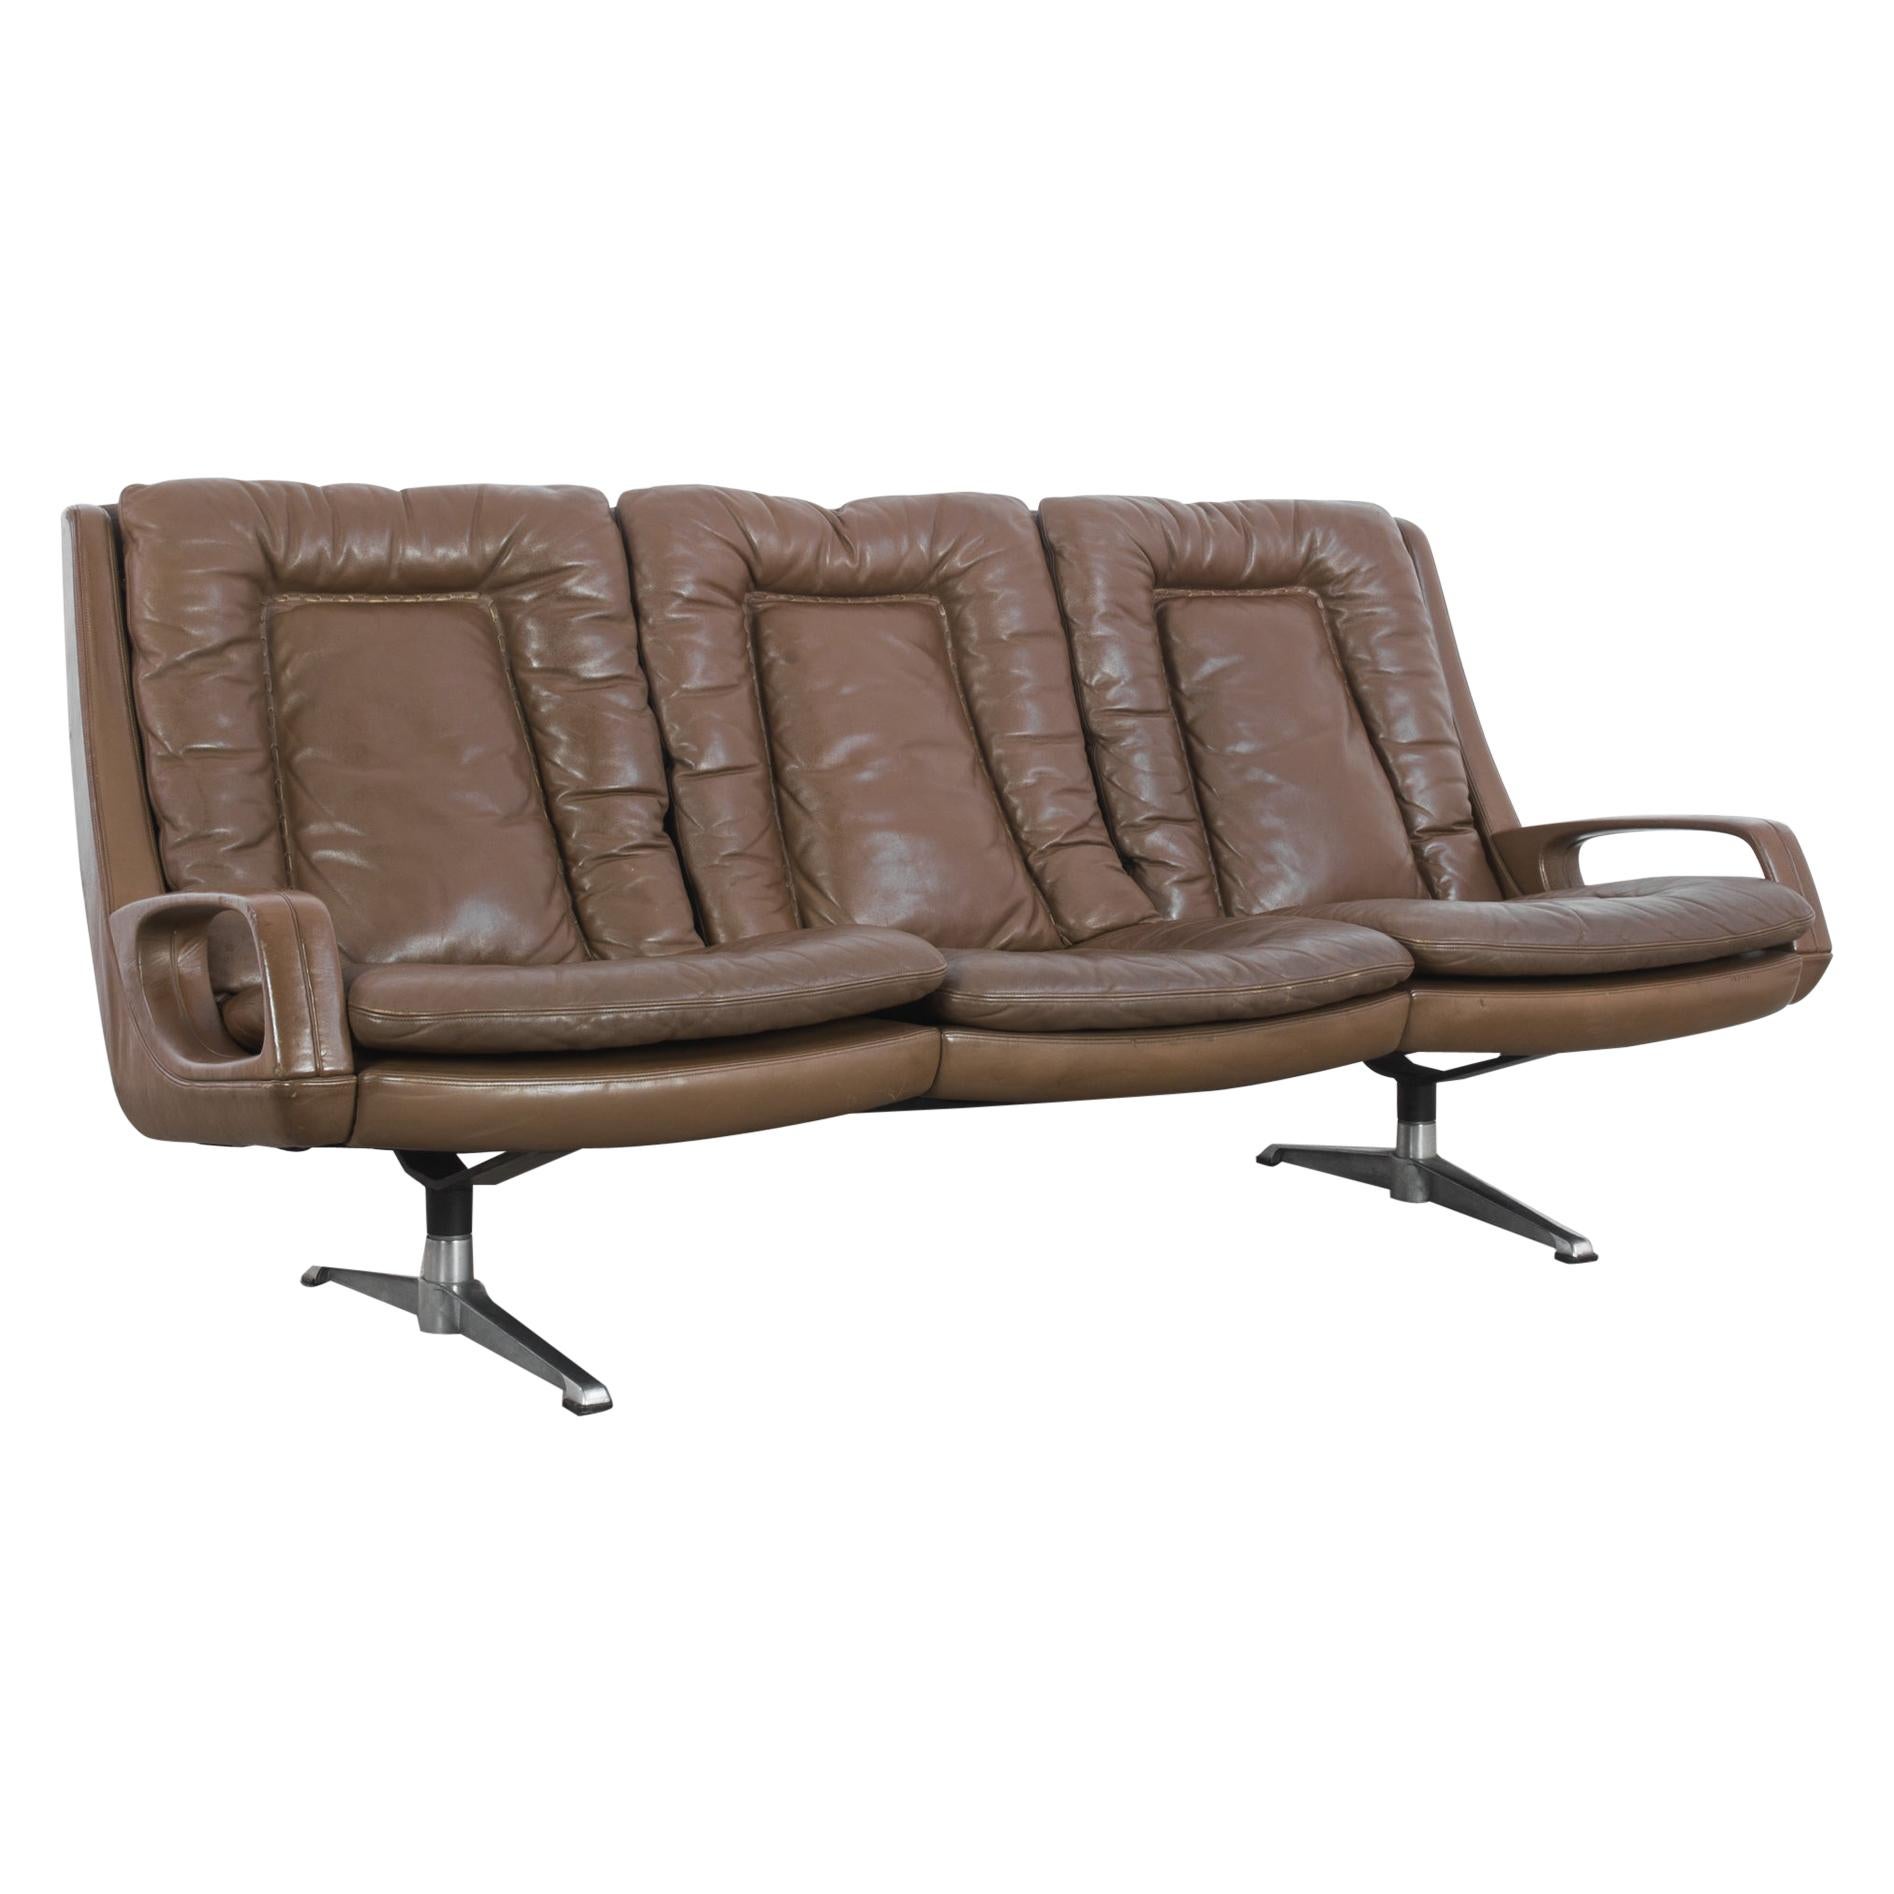 1960s Danish Modern Leather Sofa